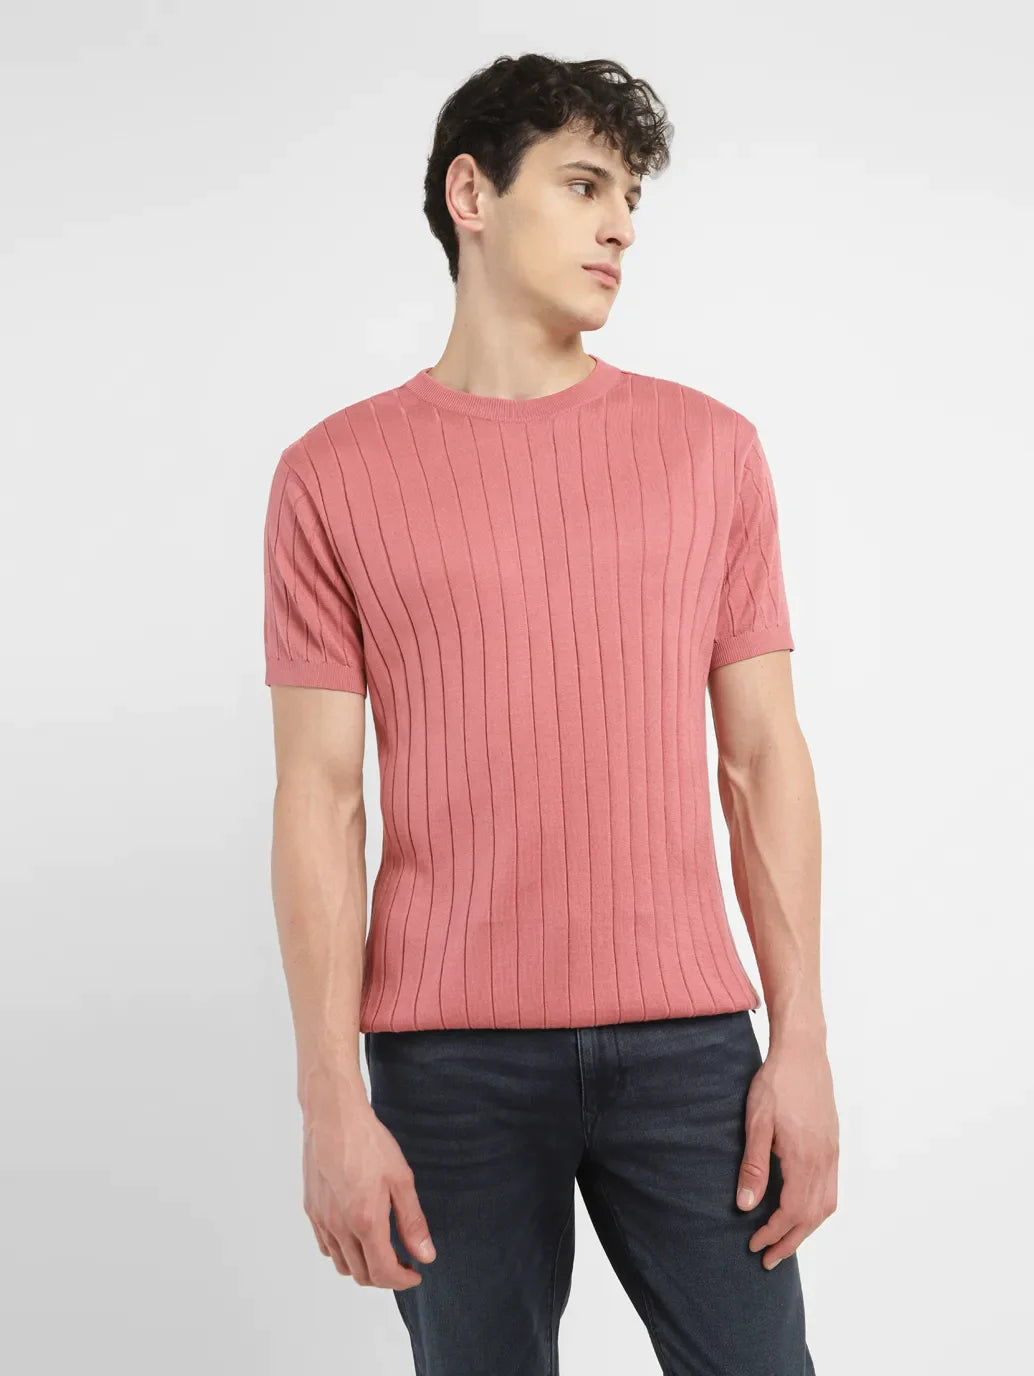 Men's Striped Pink Crew Neck Sweater